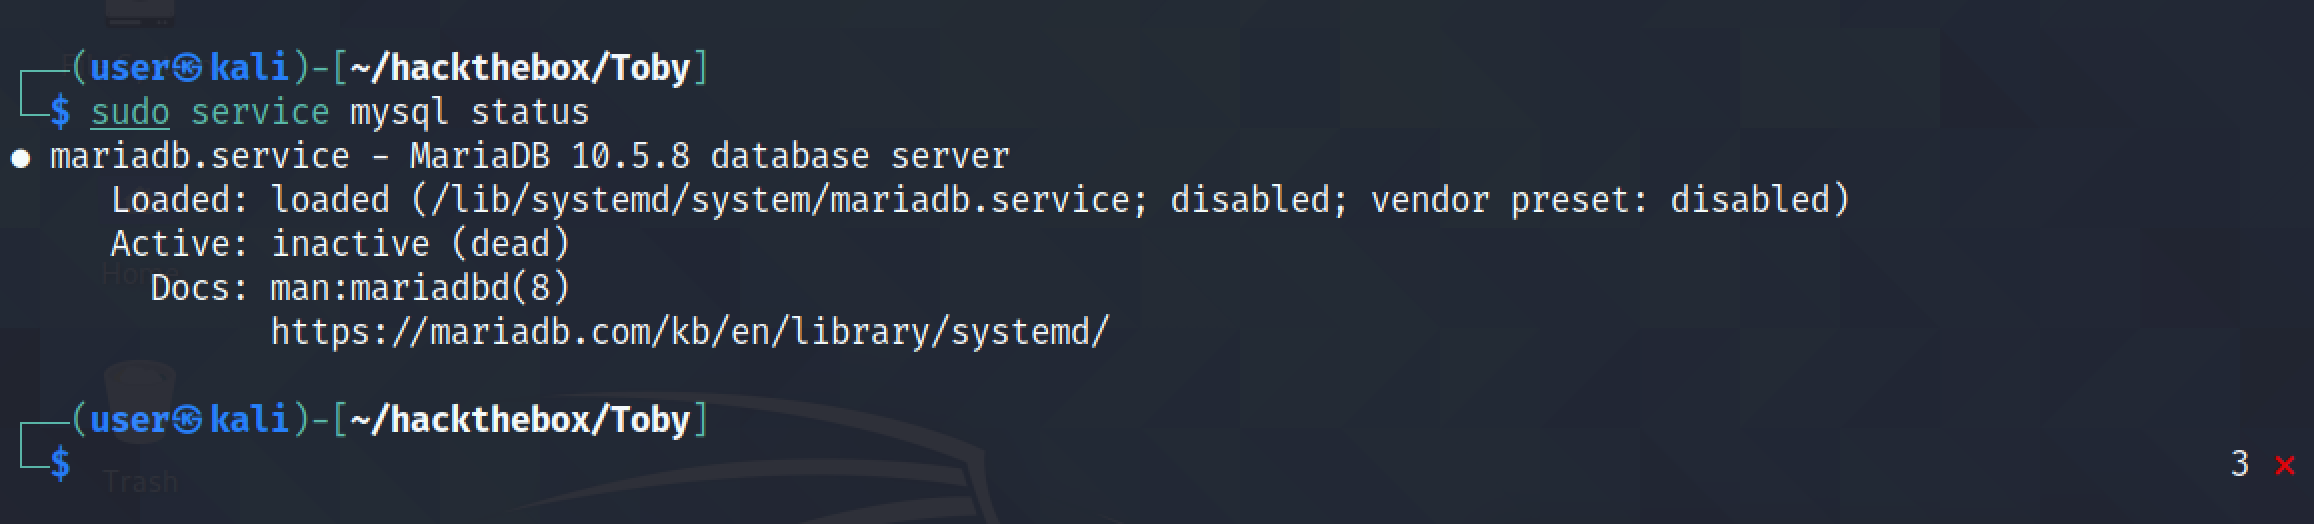 MySQL/MariaDB service not running or inactive.